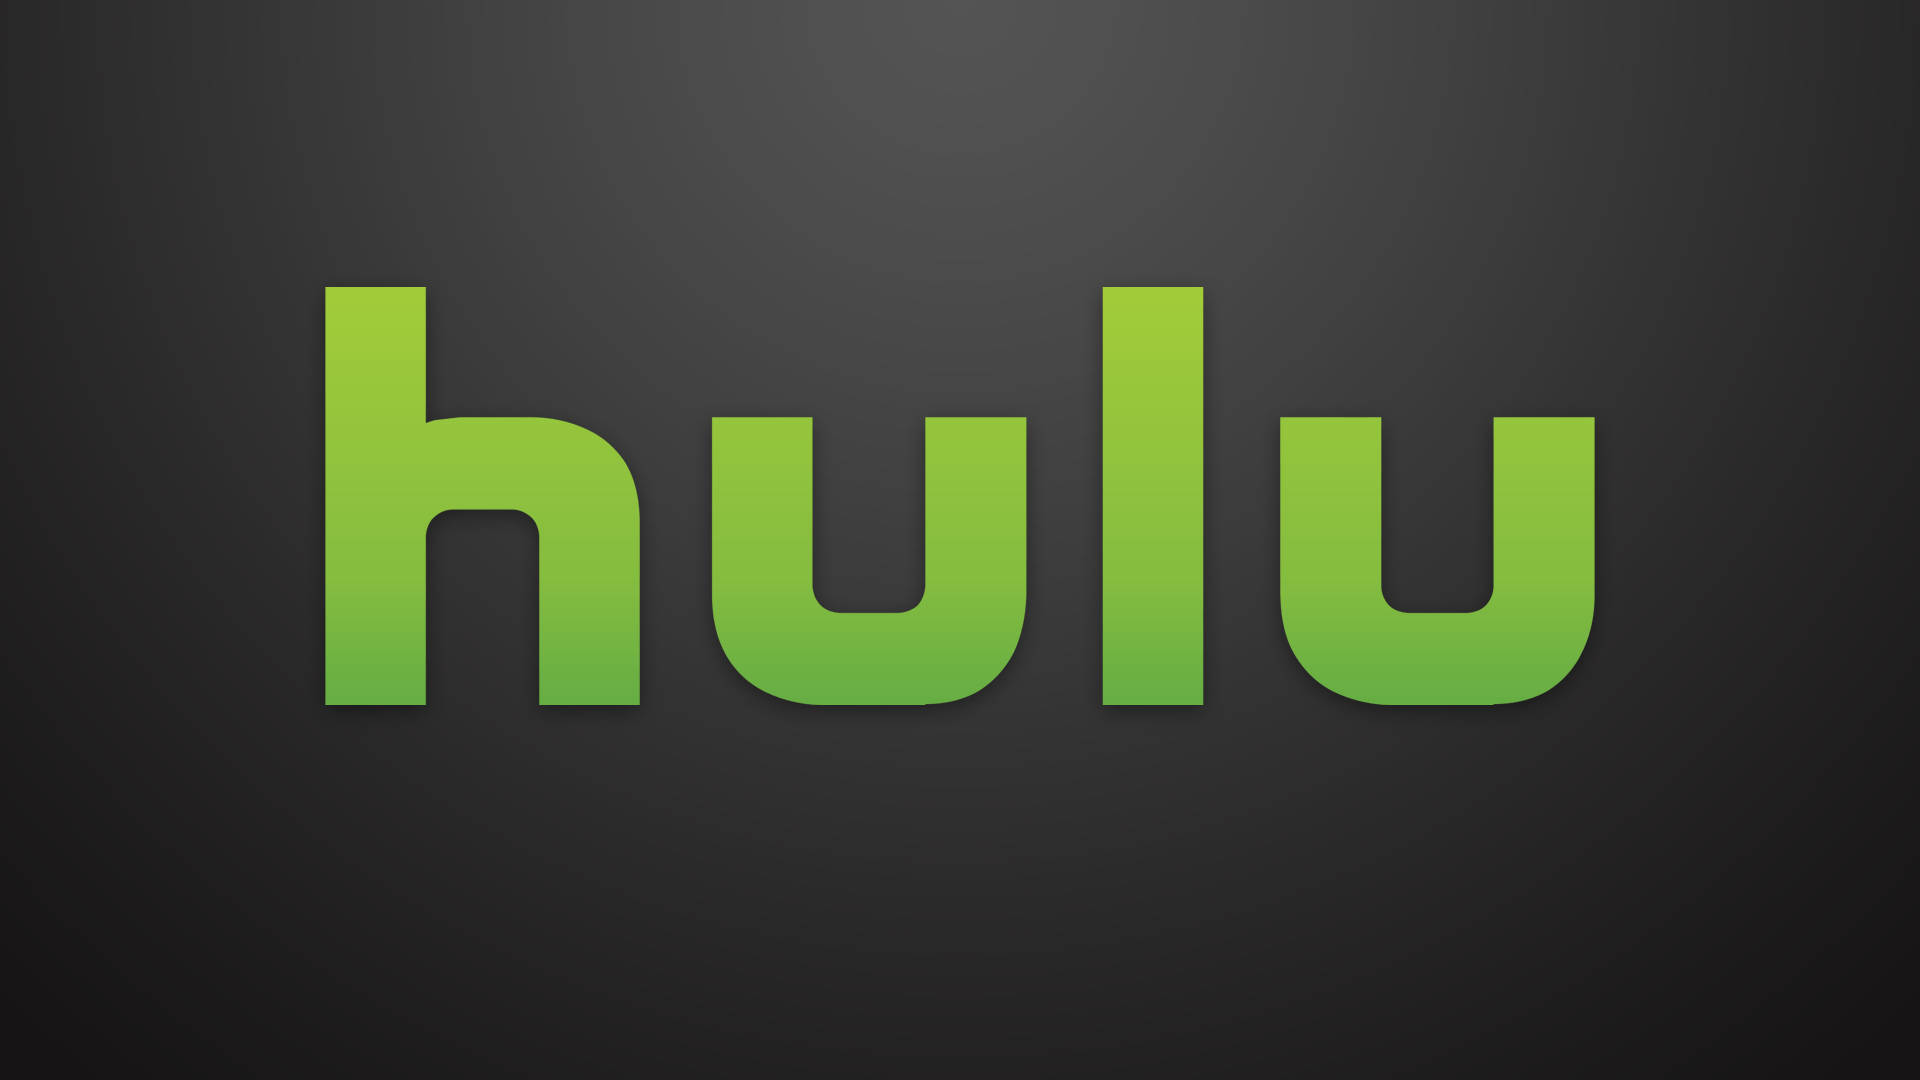 Hulu Green Matte Background